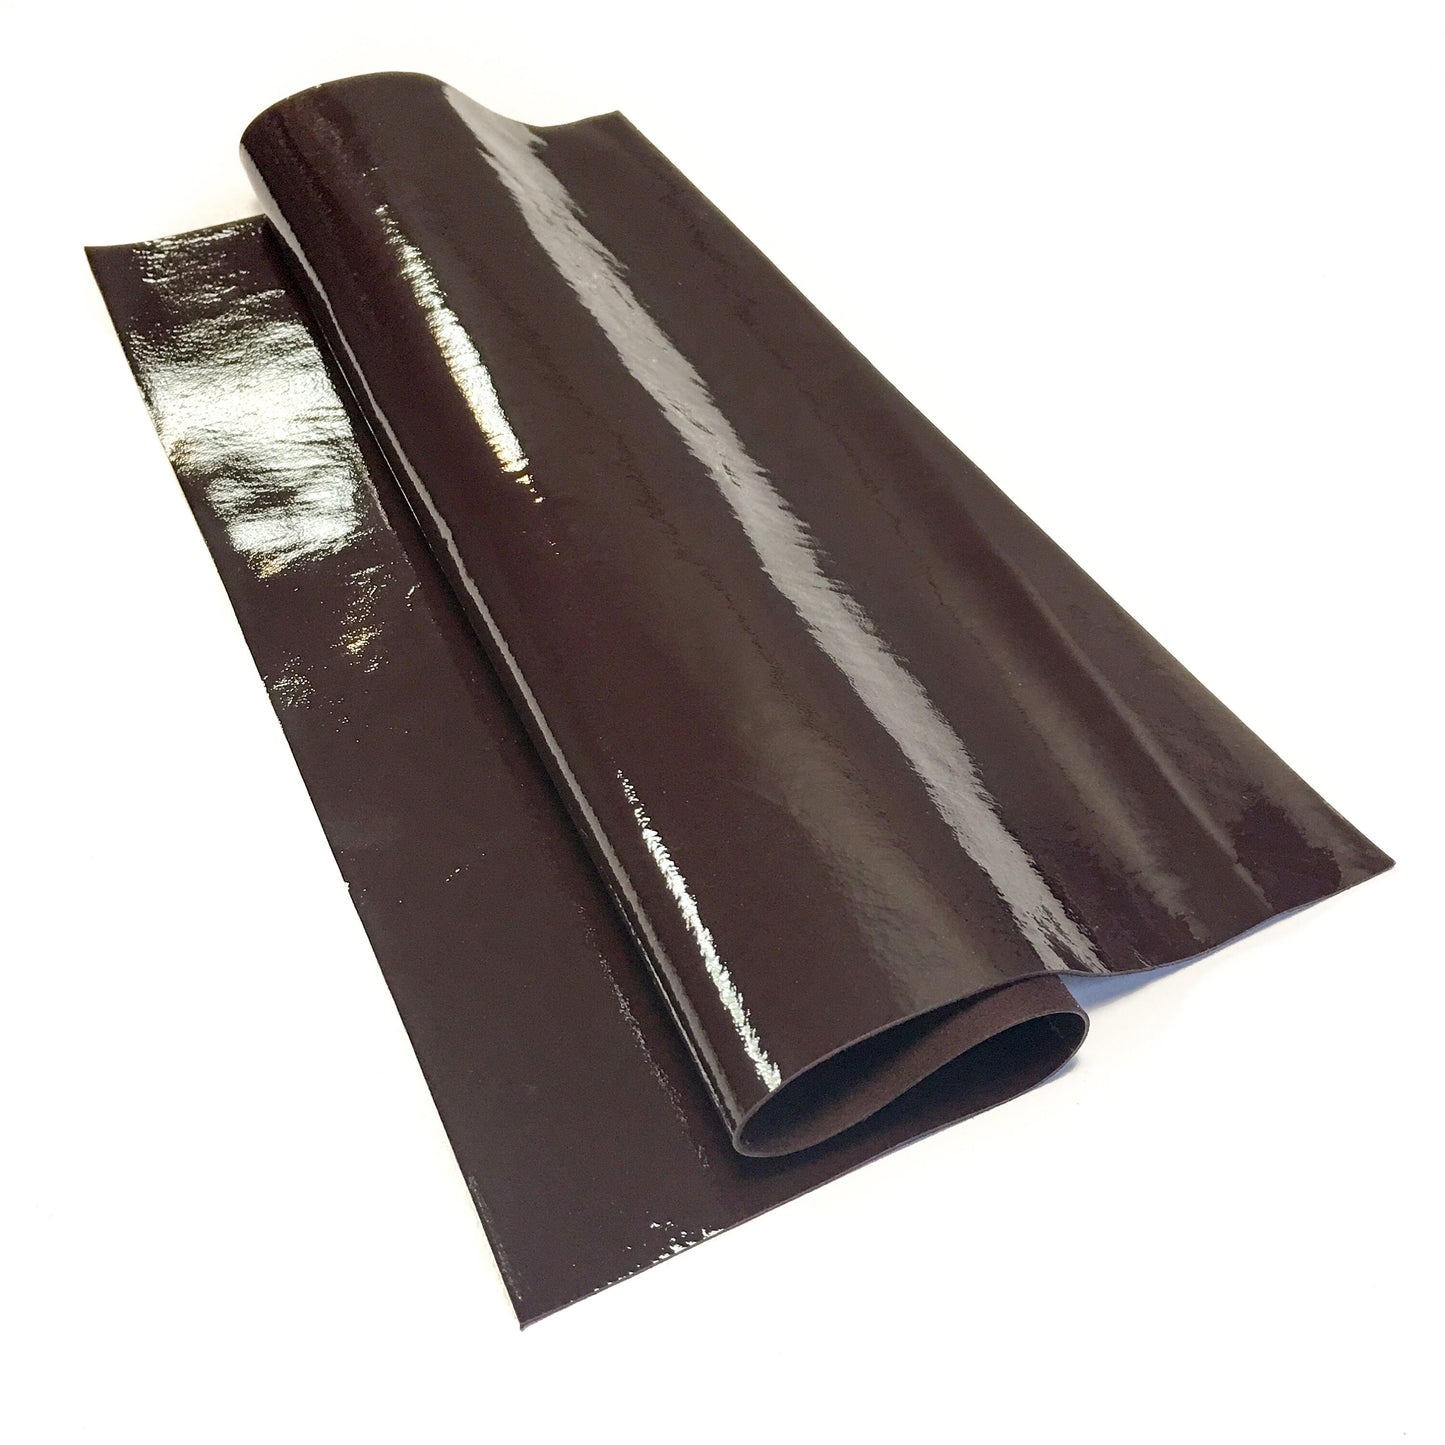 Burgundy Patent Leather Sheets 1.5oz/0.6mm / CATAWBA GRAPE 841